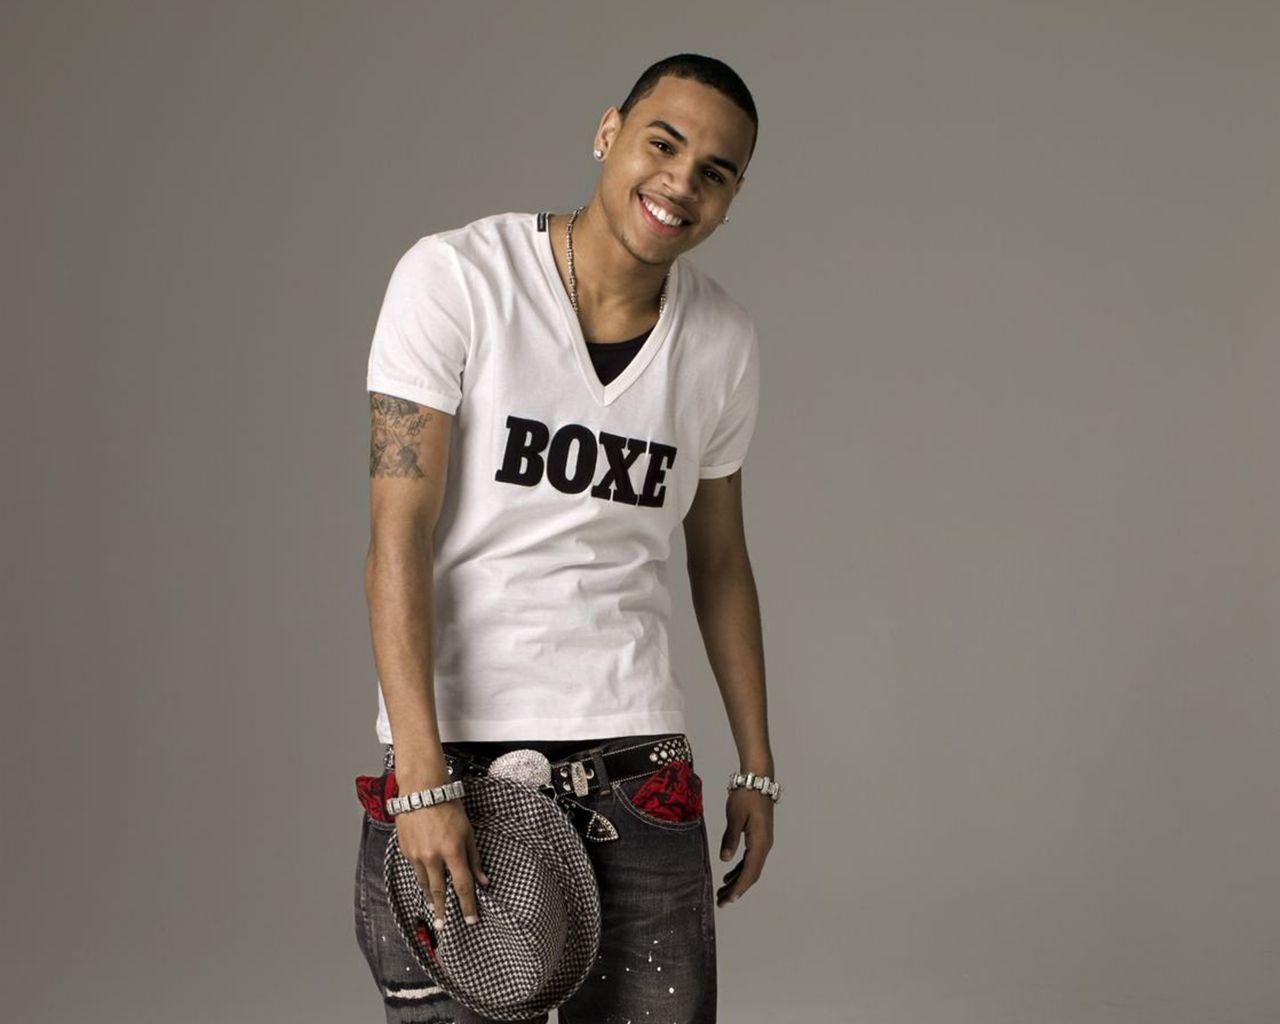 Chris Brown image (50 wallpaper)